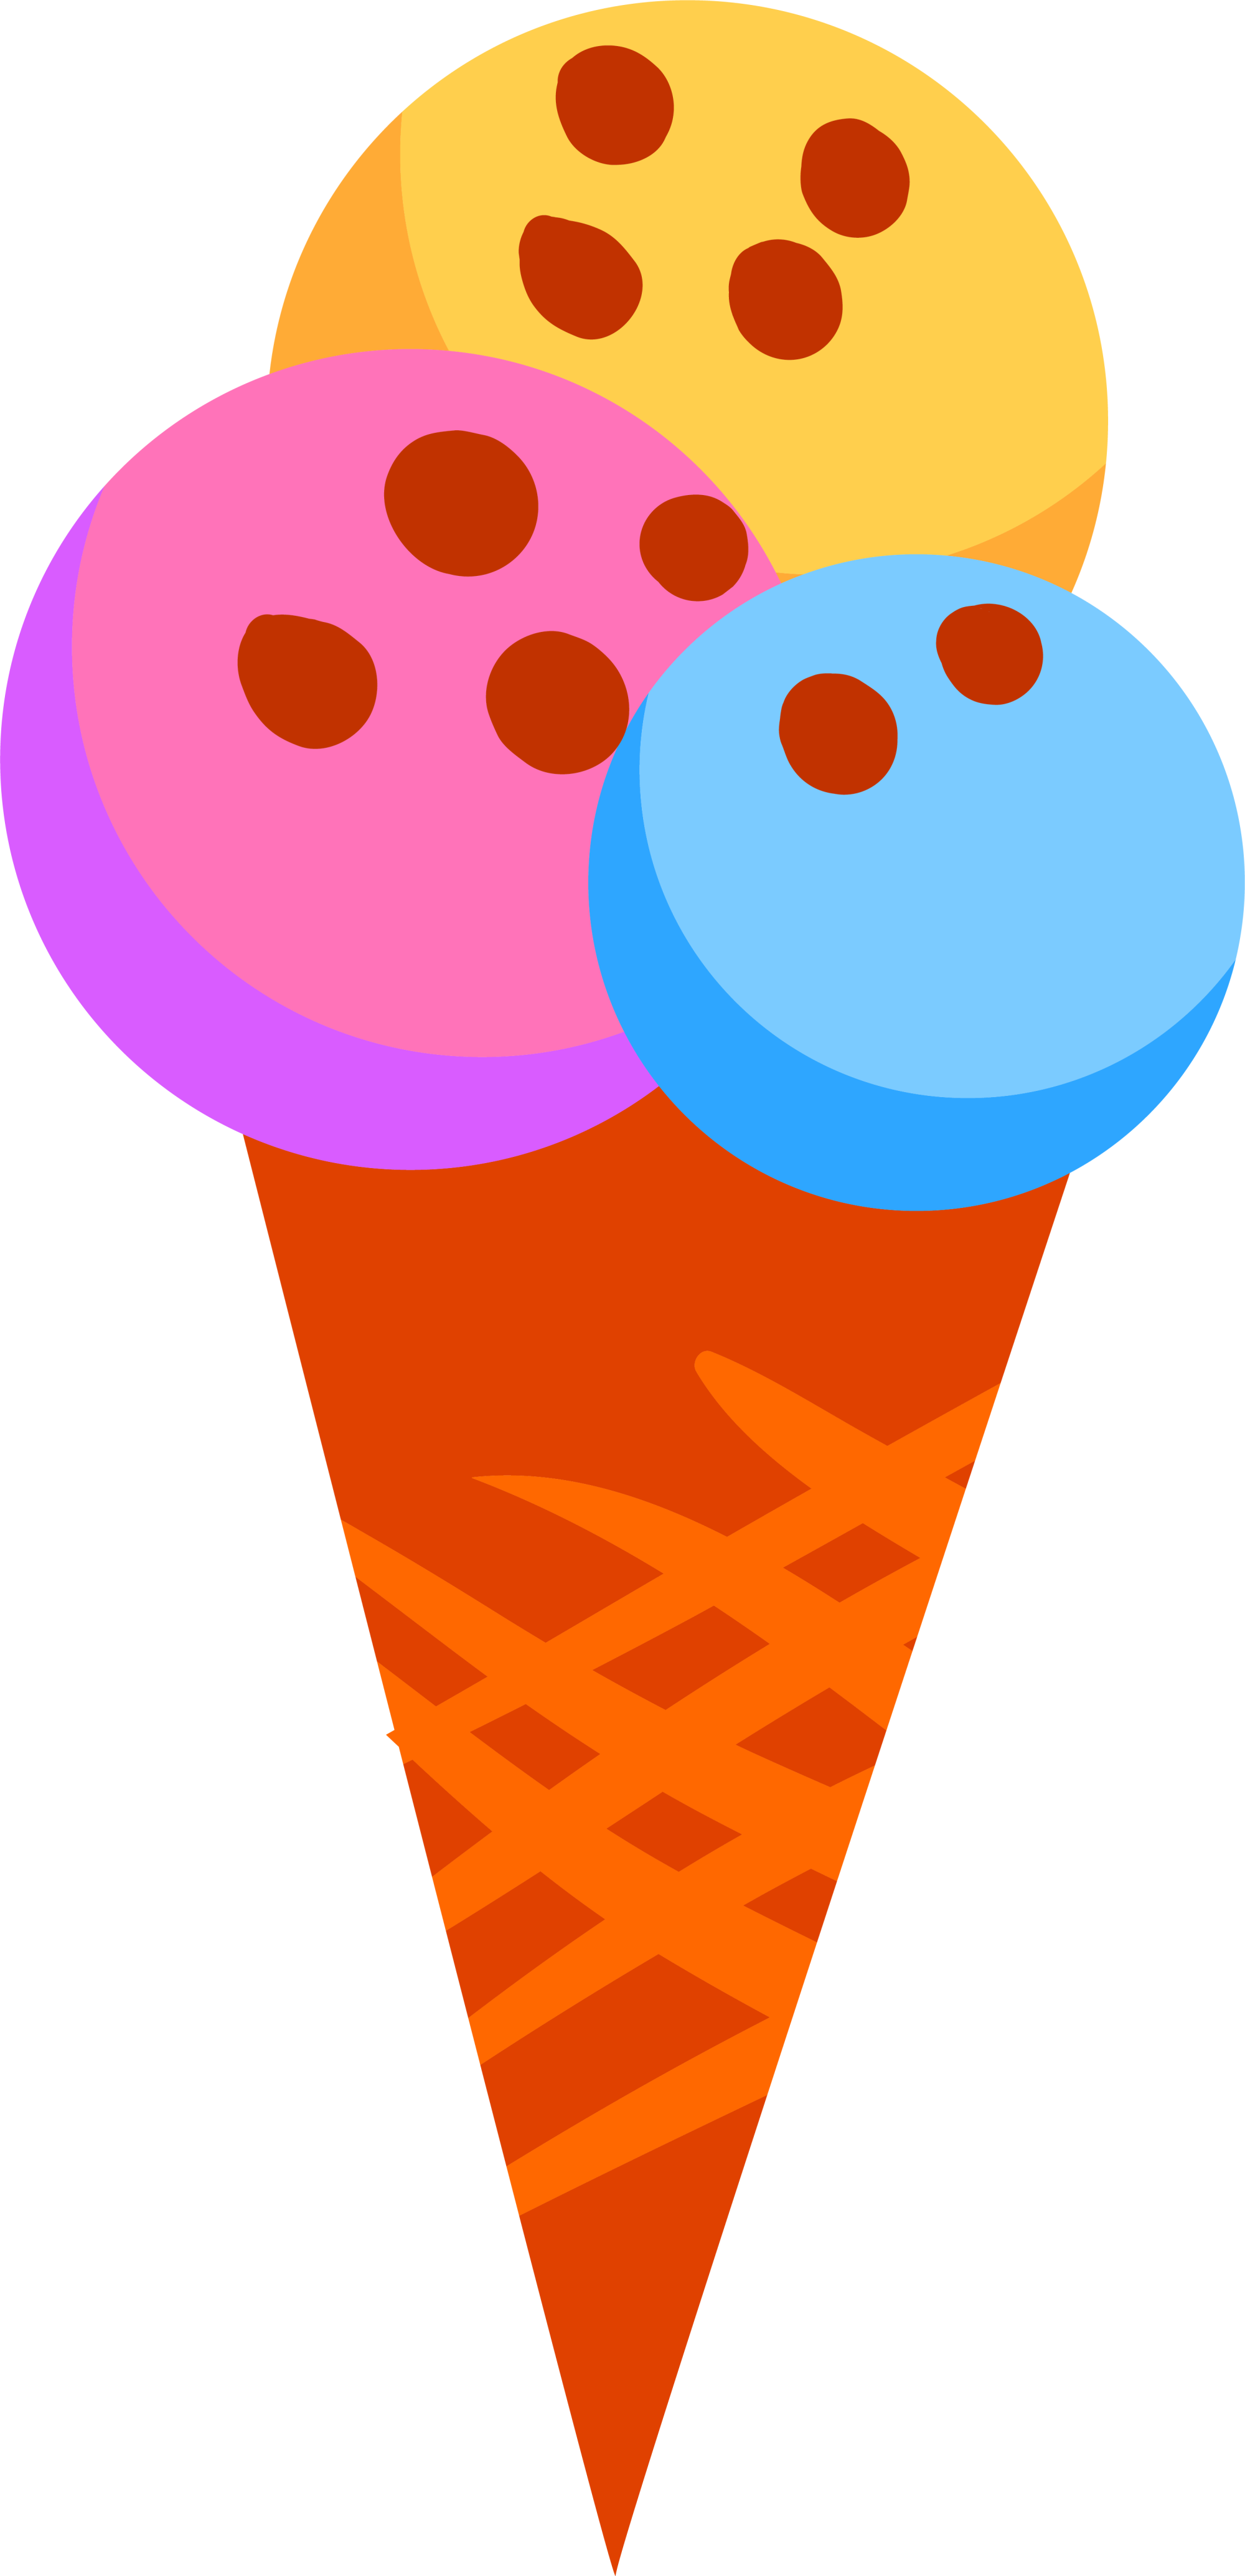 Icecream clipart colorful.